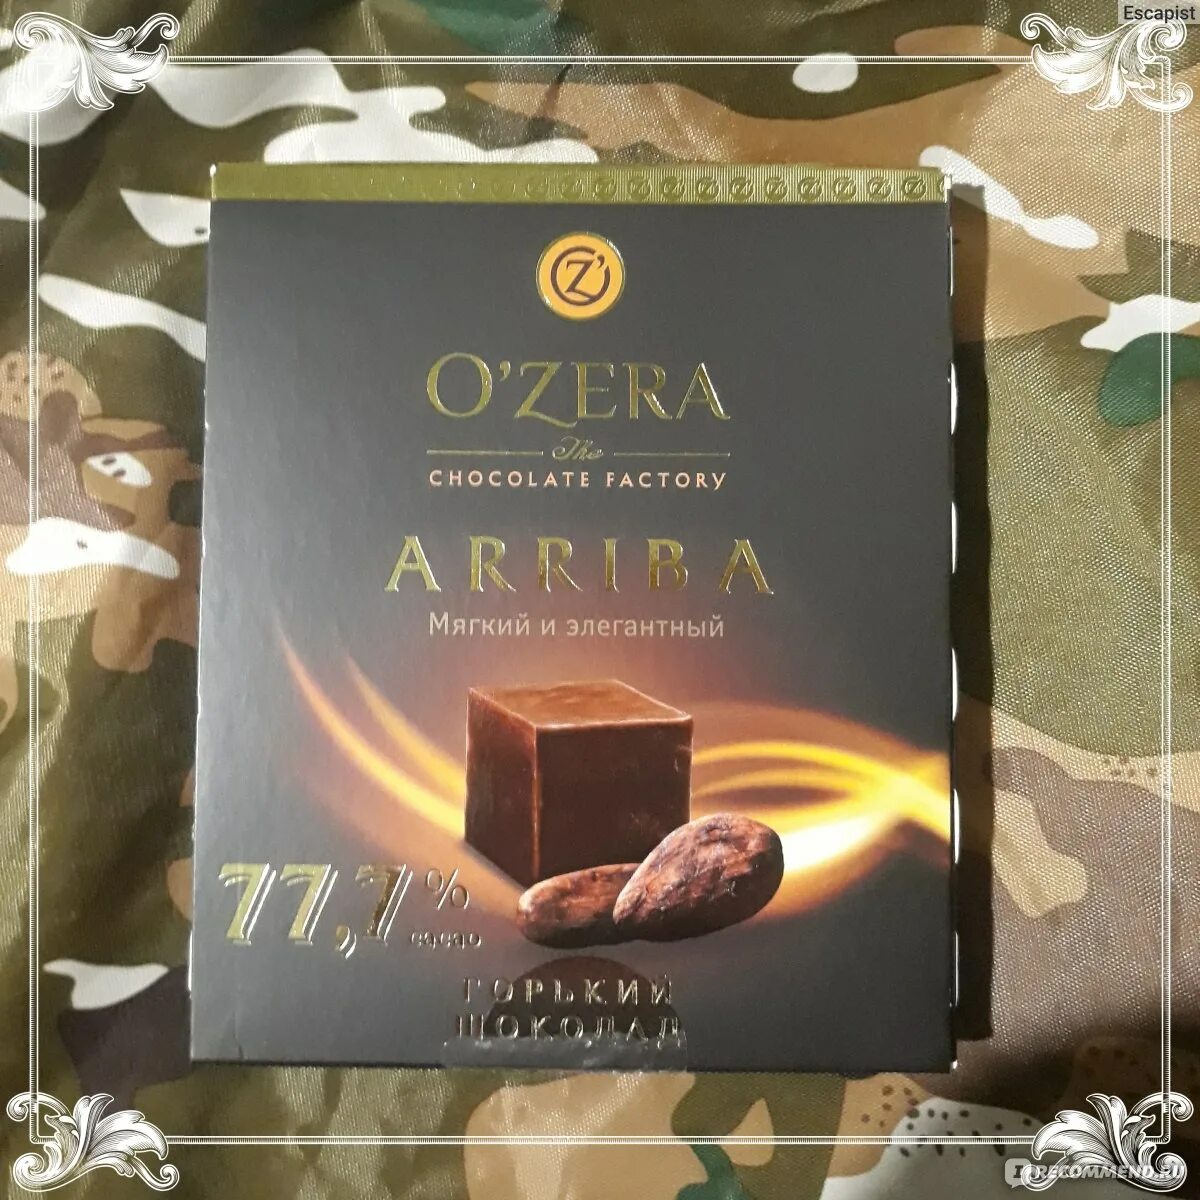 Zera шоколад. Горький шоколад o'Zera arriba 77.7. Шоколад Ozera arriba 77.7% 90г. Шоколад озера Арриба 77.7 Горький корейский. Конфеты o'Zera Горький шоколад.